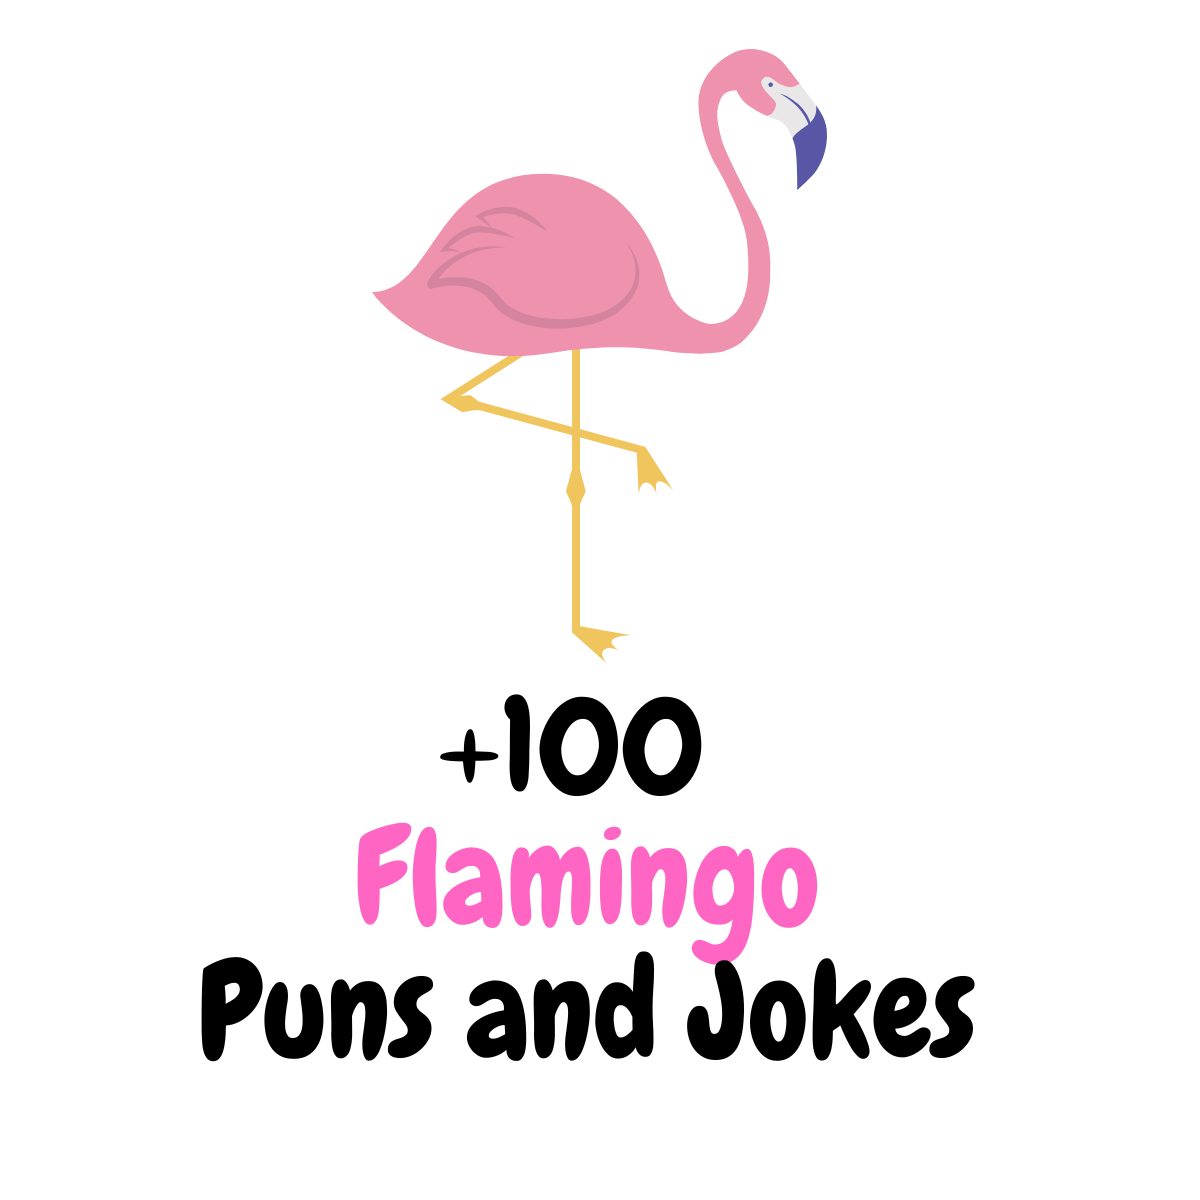 +100 Funny Flamingo Puns and Jokes to Make You Smile